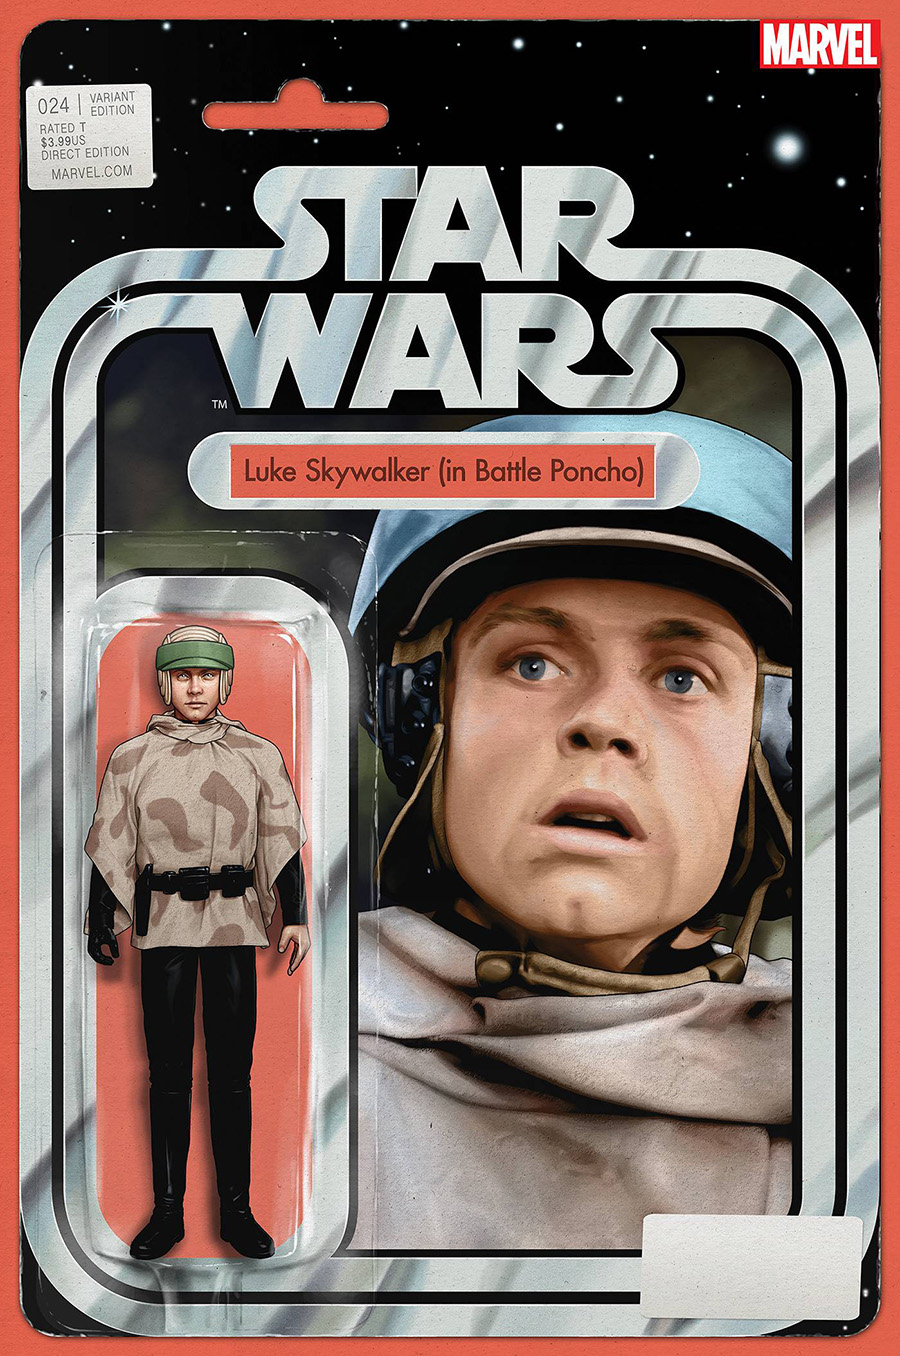 Star Wars Vol 5 #24 Cover D Variant John Tyler Christopher Action Figure Cover